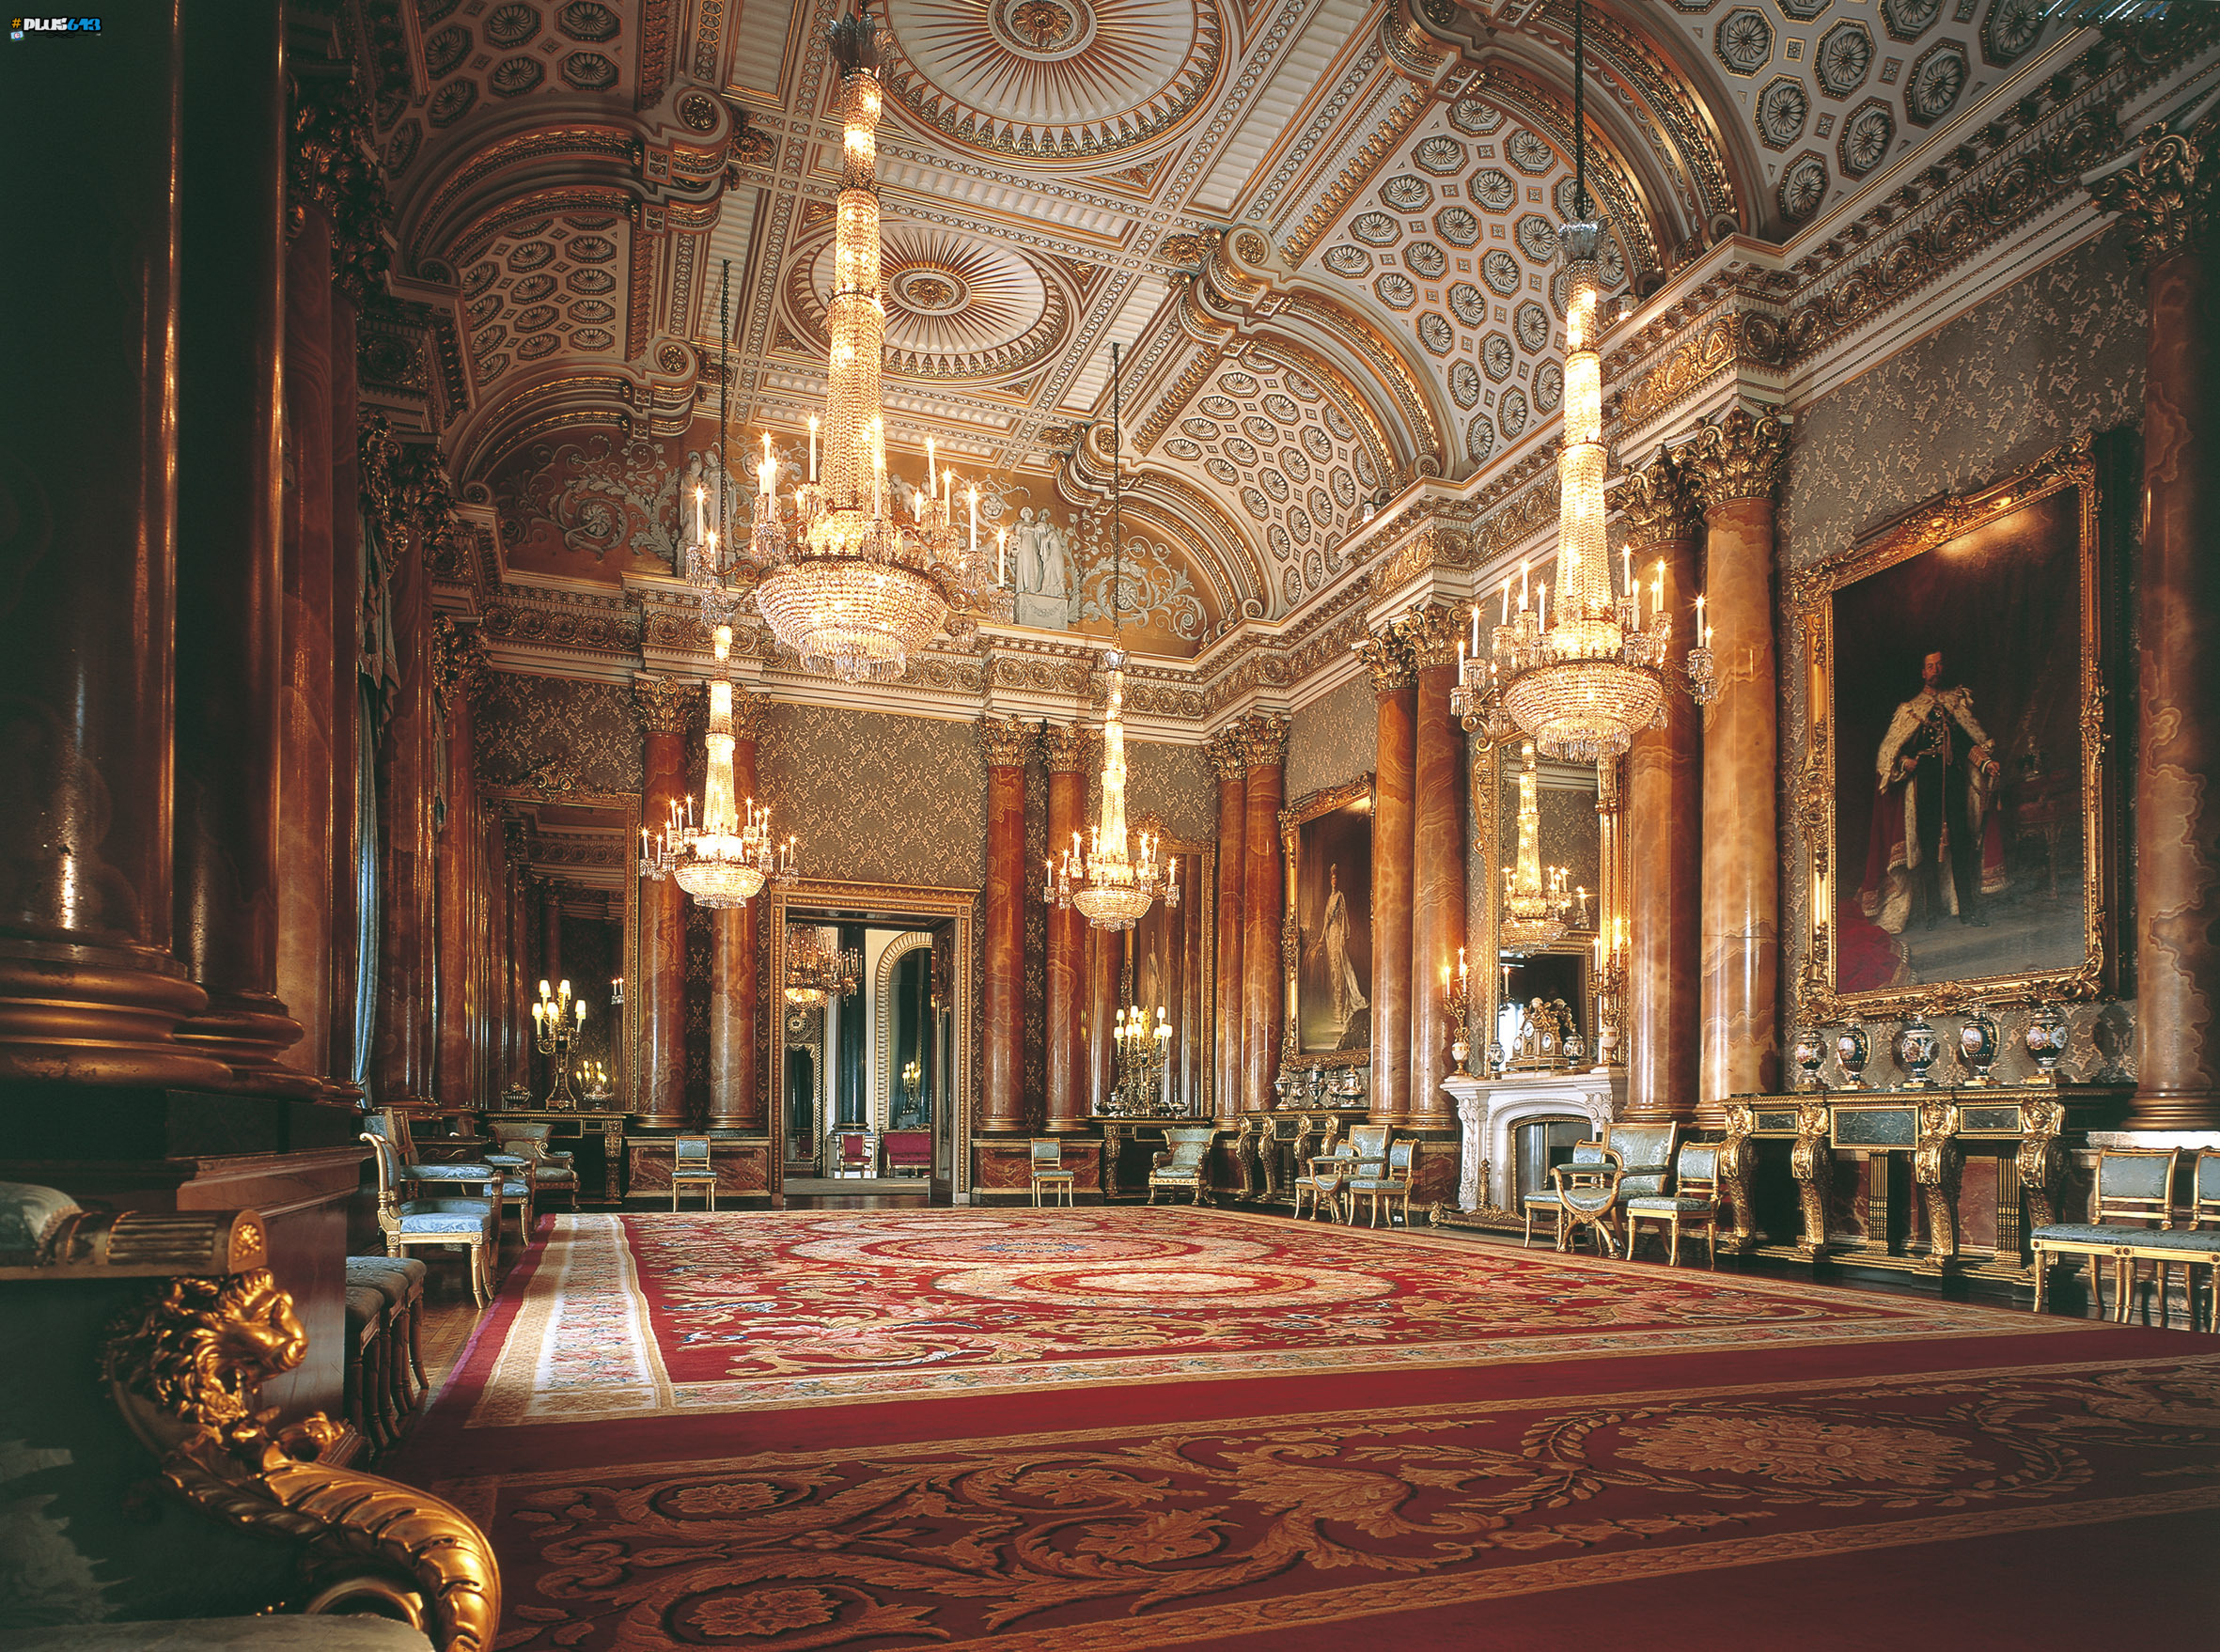 Architecture - Buckingham Palace